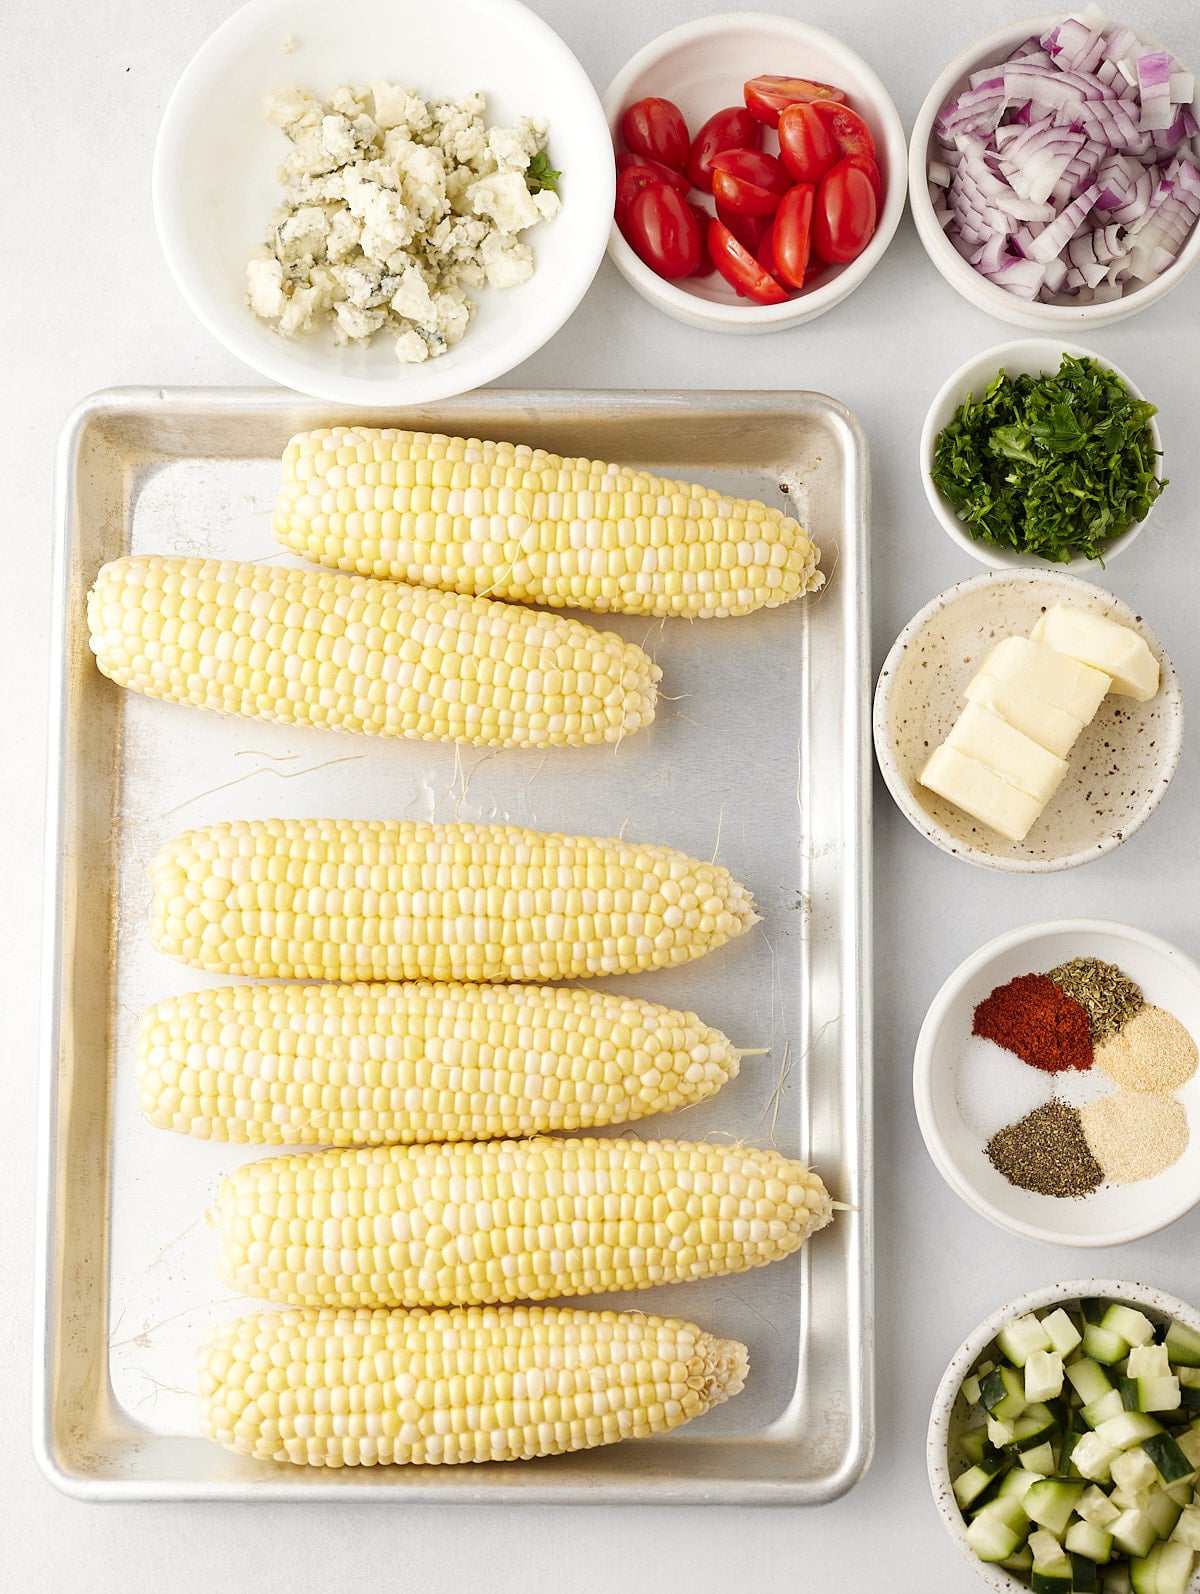 Ingredients to make the corn salad.